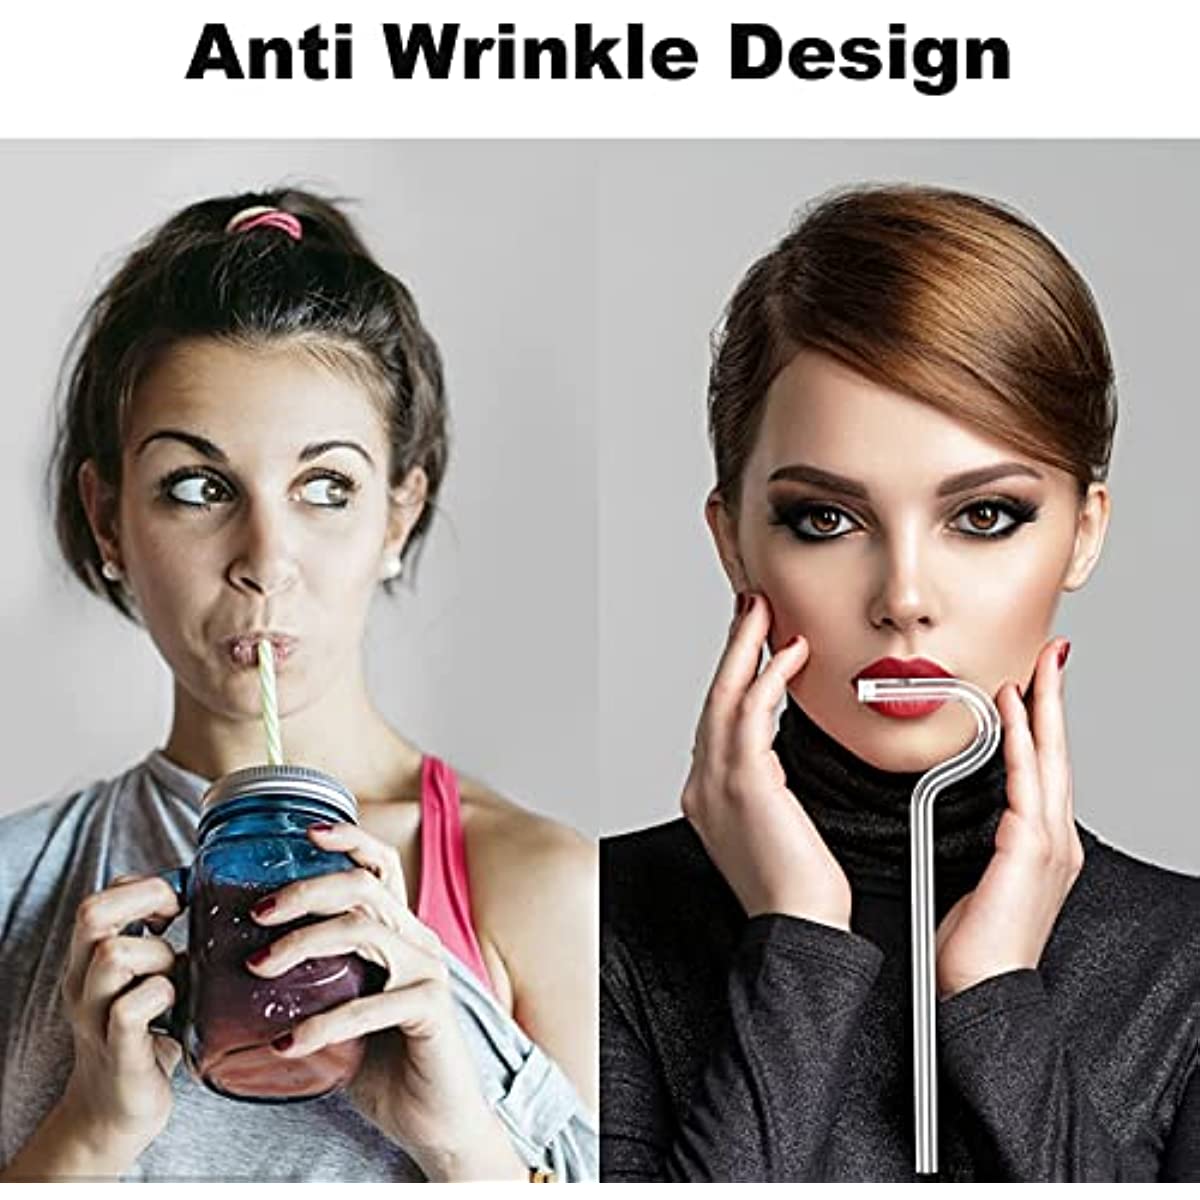 Do Straws Cause Wrinkles?